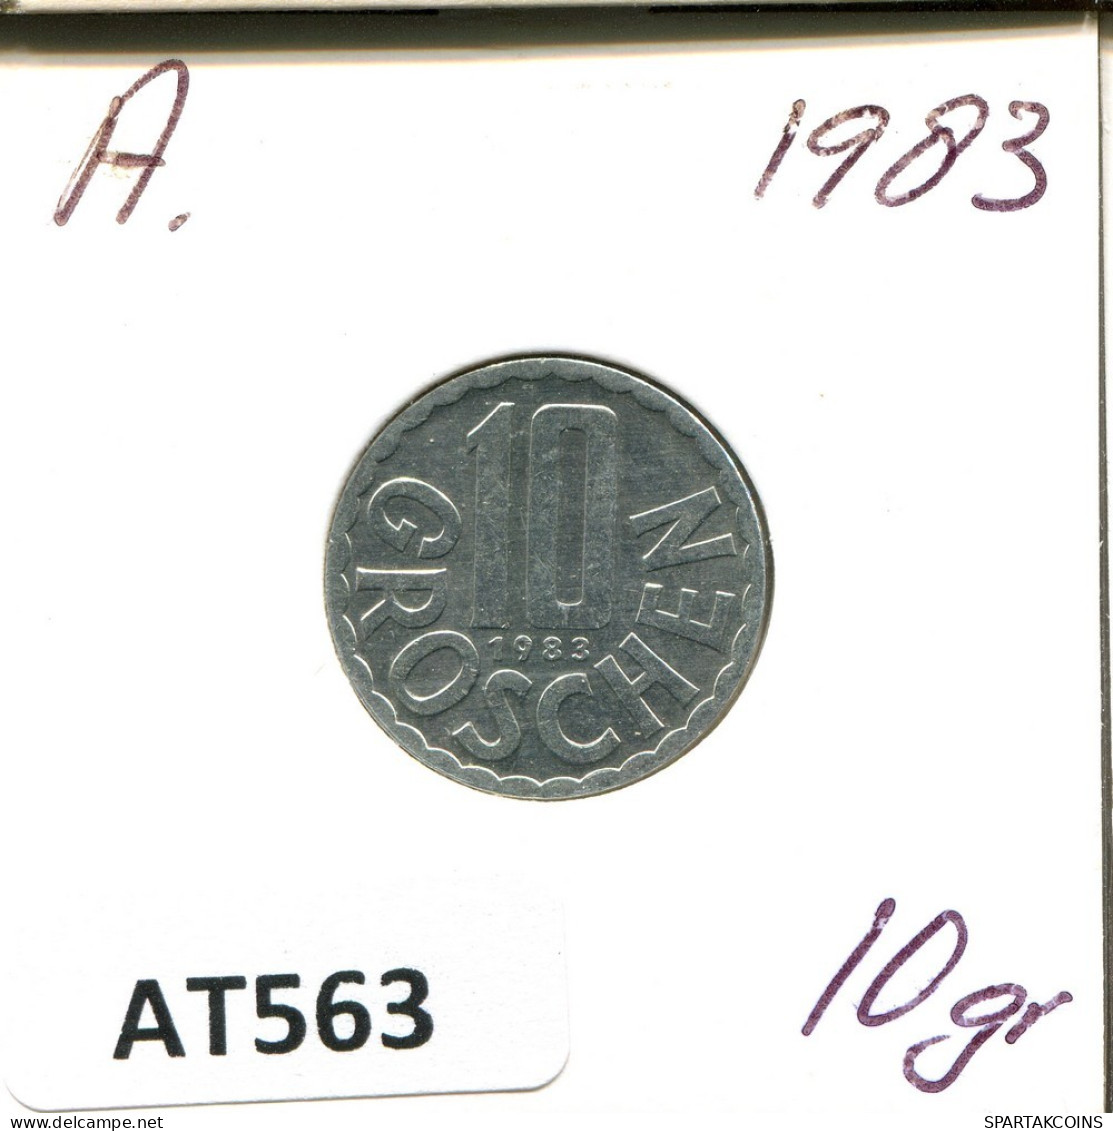 10 GROSCHEN 1983 AUSTRIA Coin #AT563.U.A - Austria